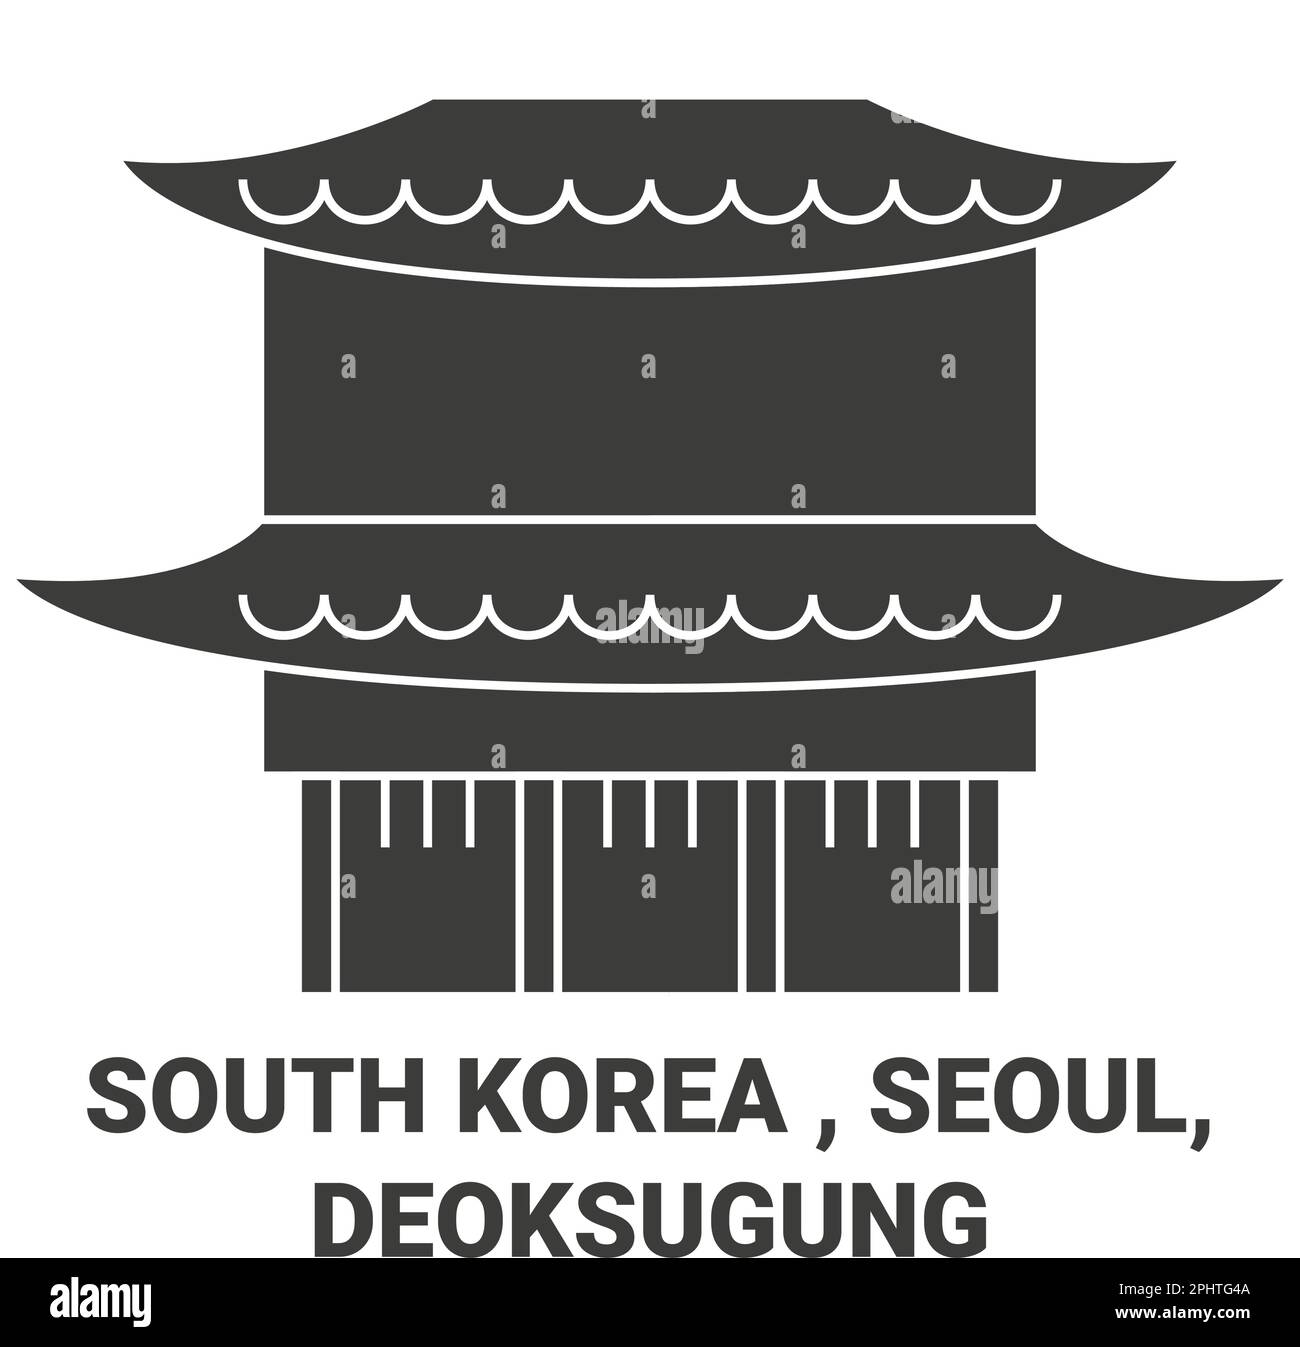 Republic Of Korea, Seoul, Deoksugung travel landmark vector illustration Stock Vector